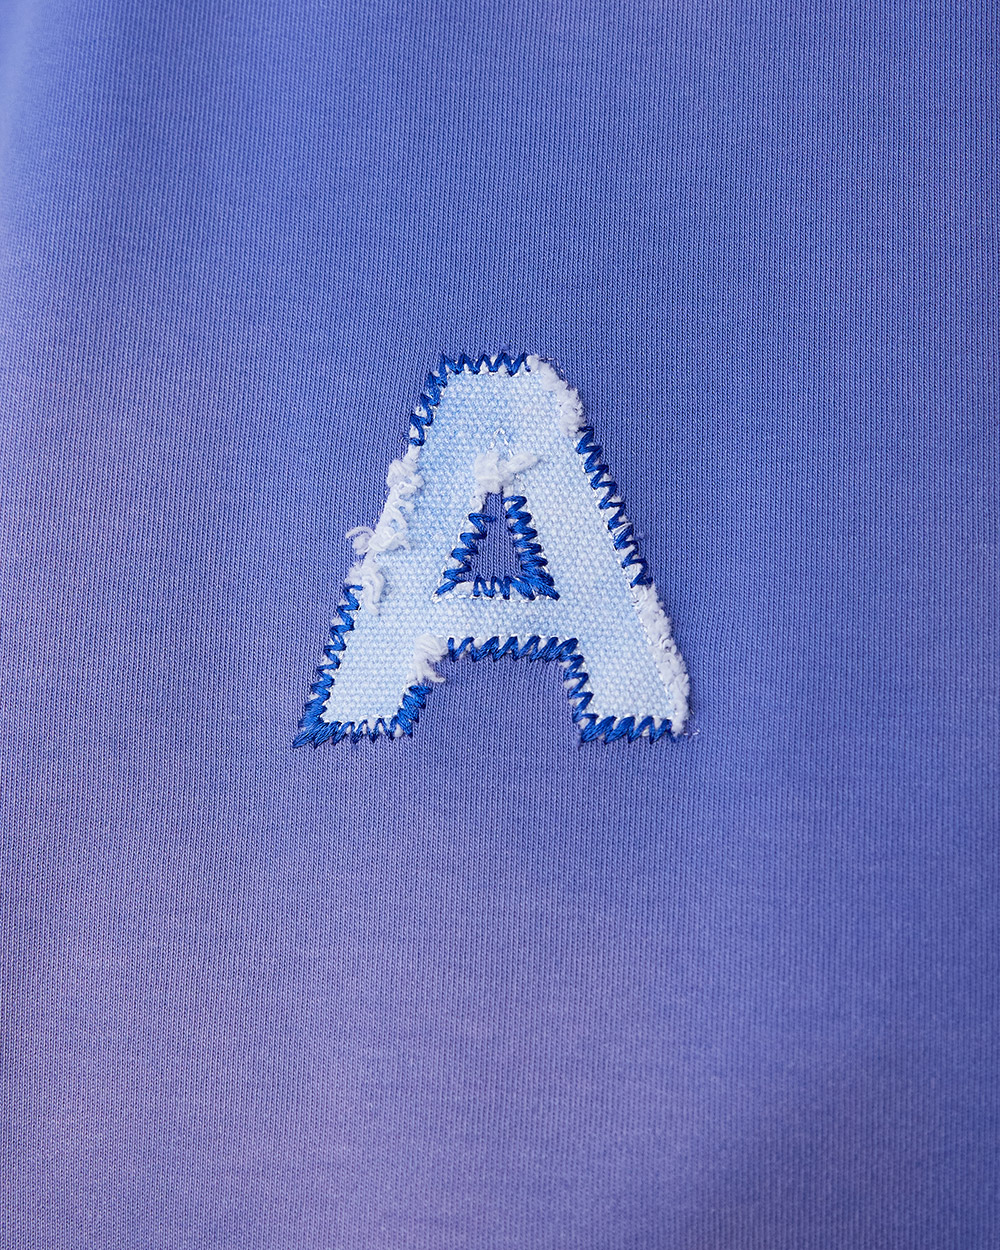 A patch t-shirt